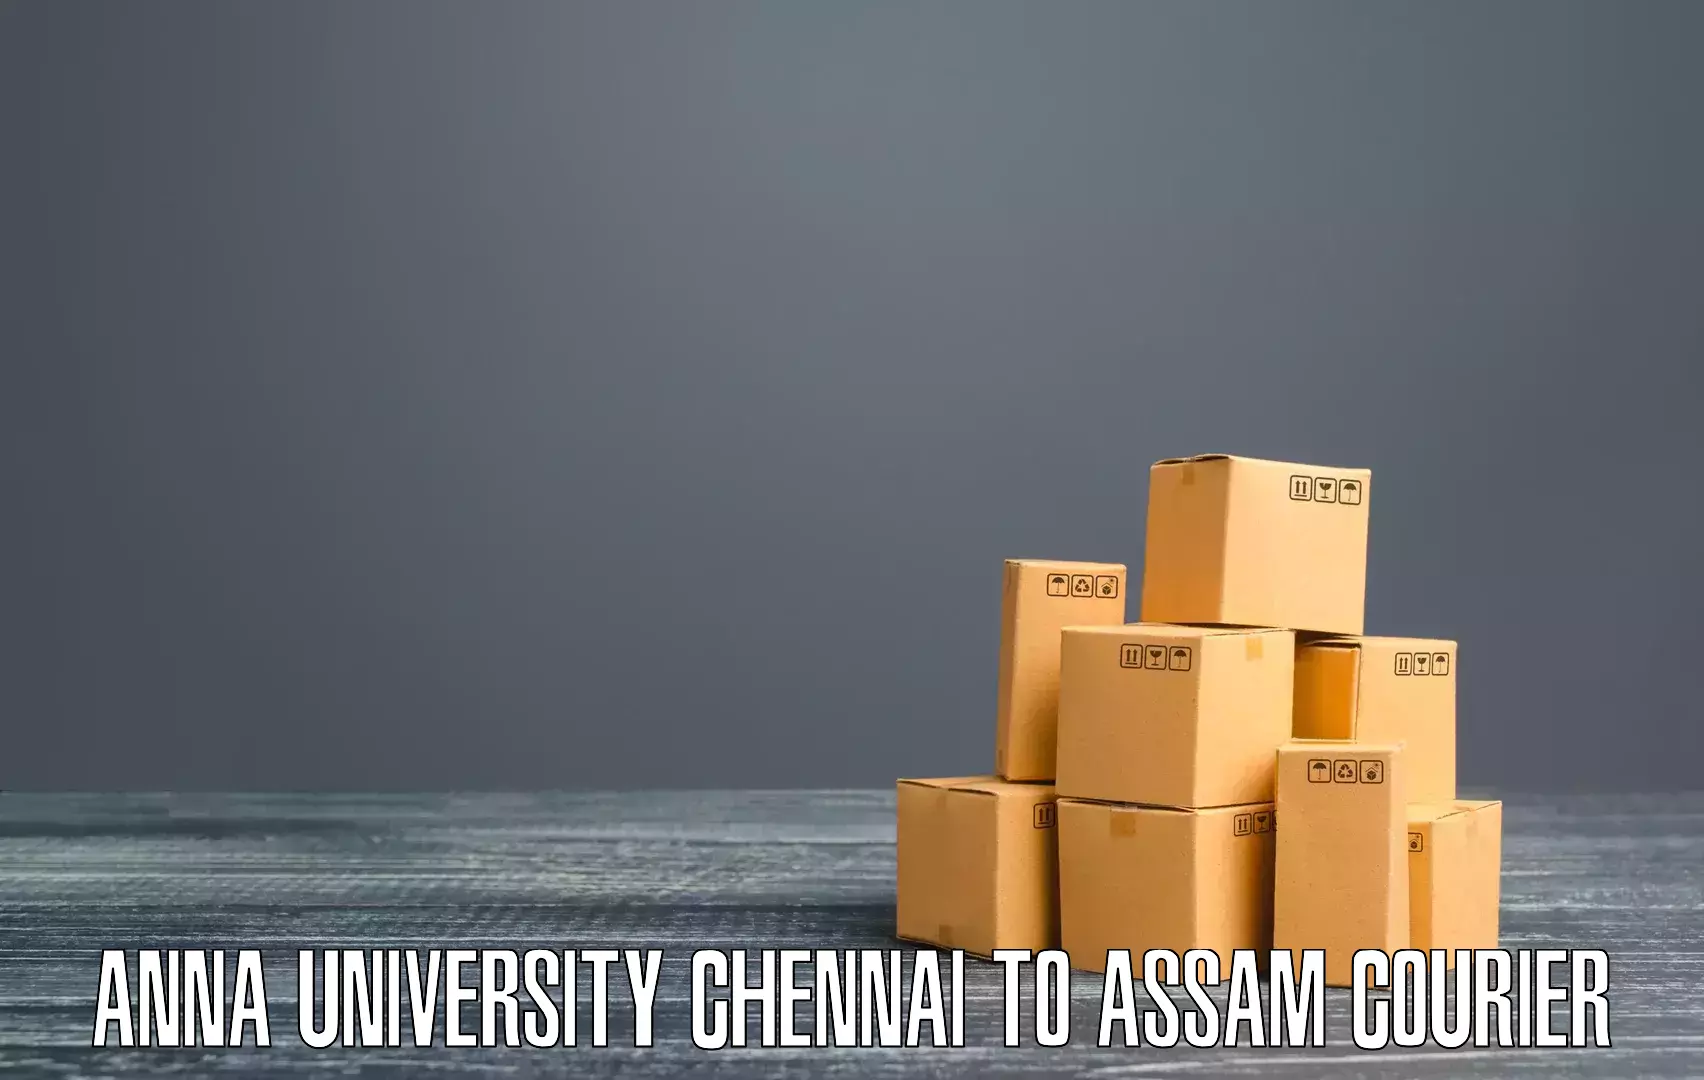 Express logistics providers Anna University Chennai to Assam